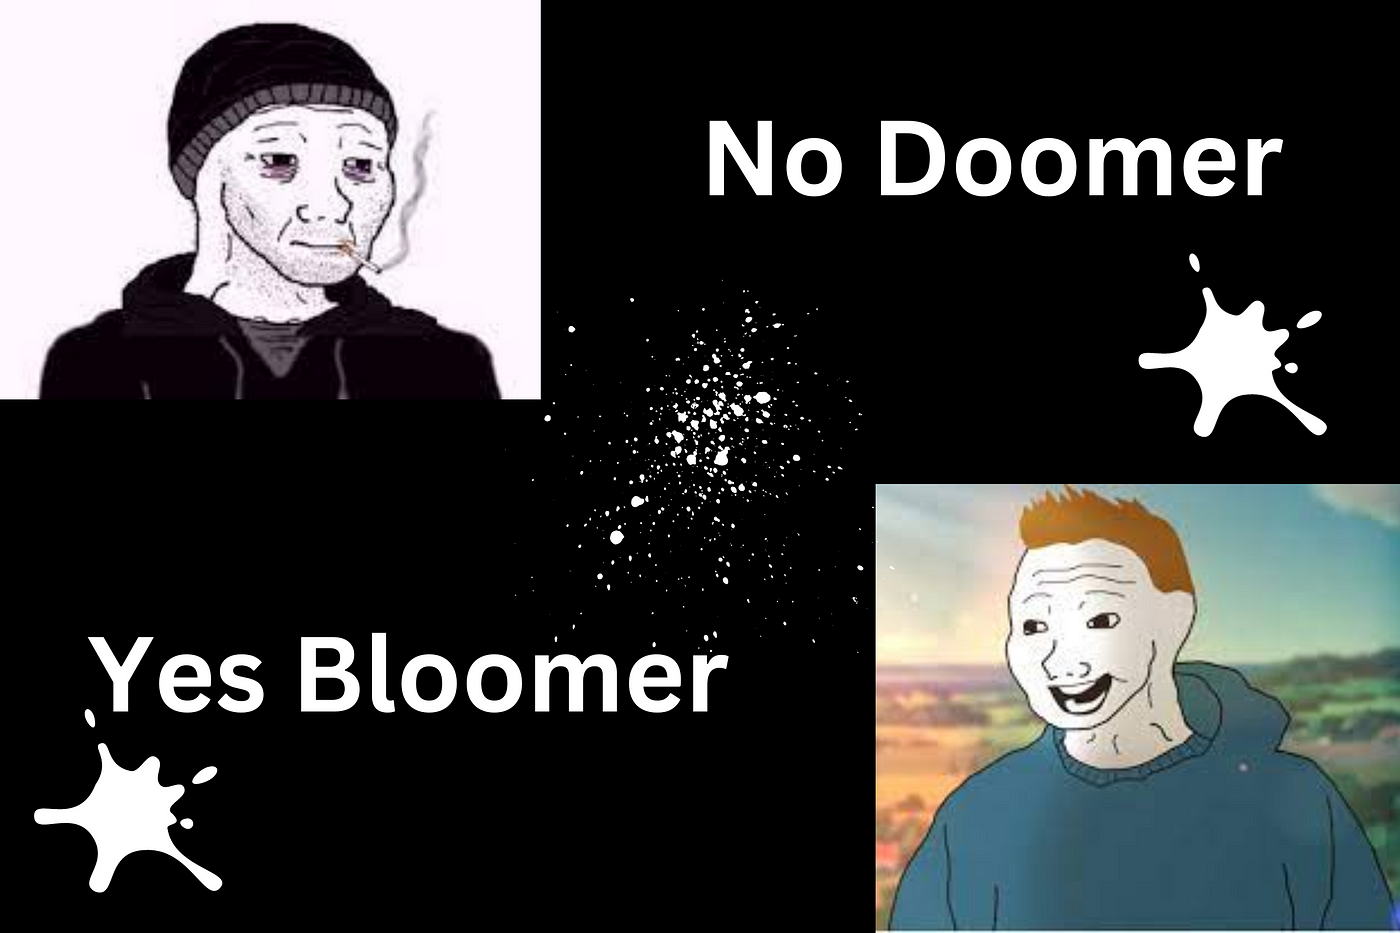 Doomer - What is a doomer?